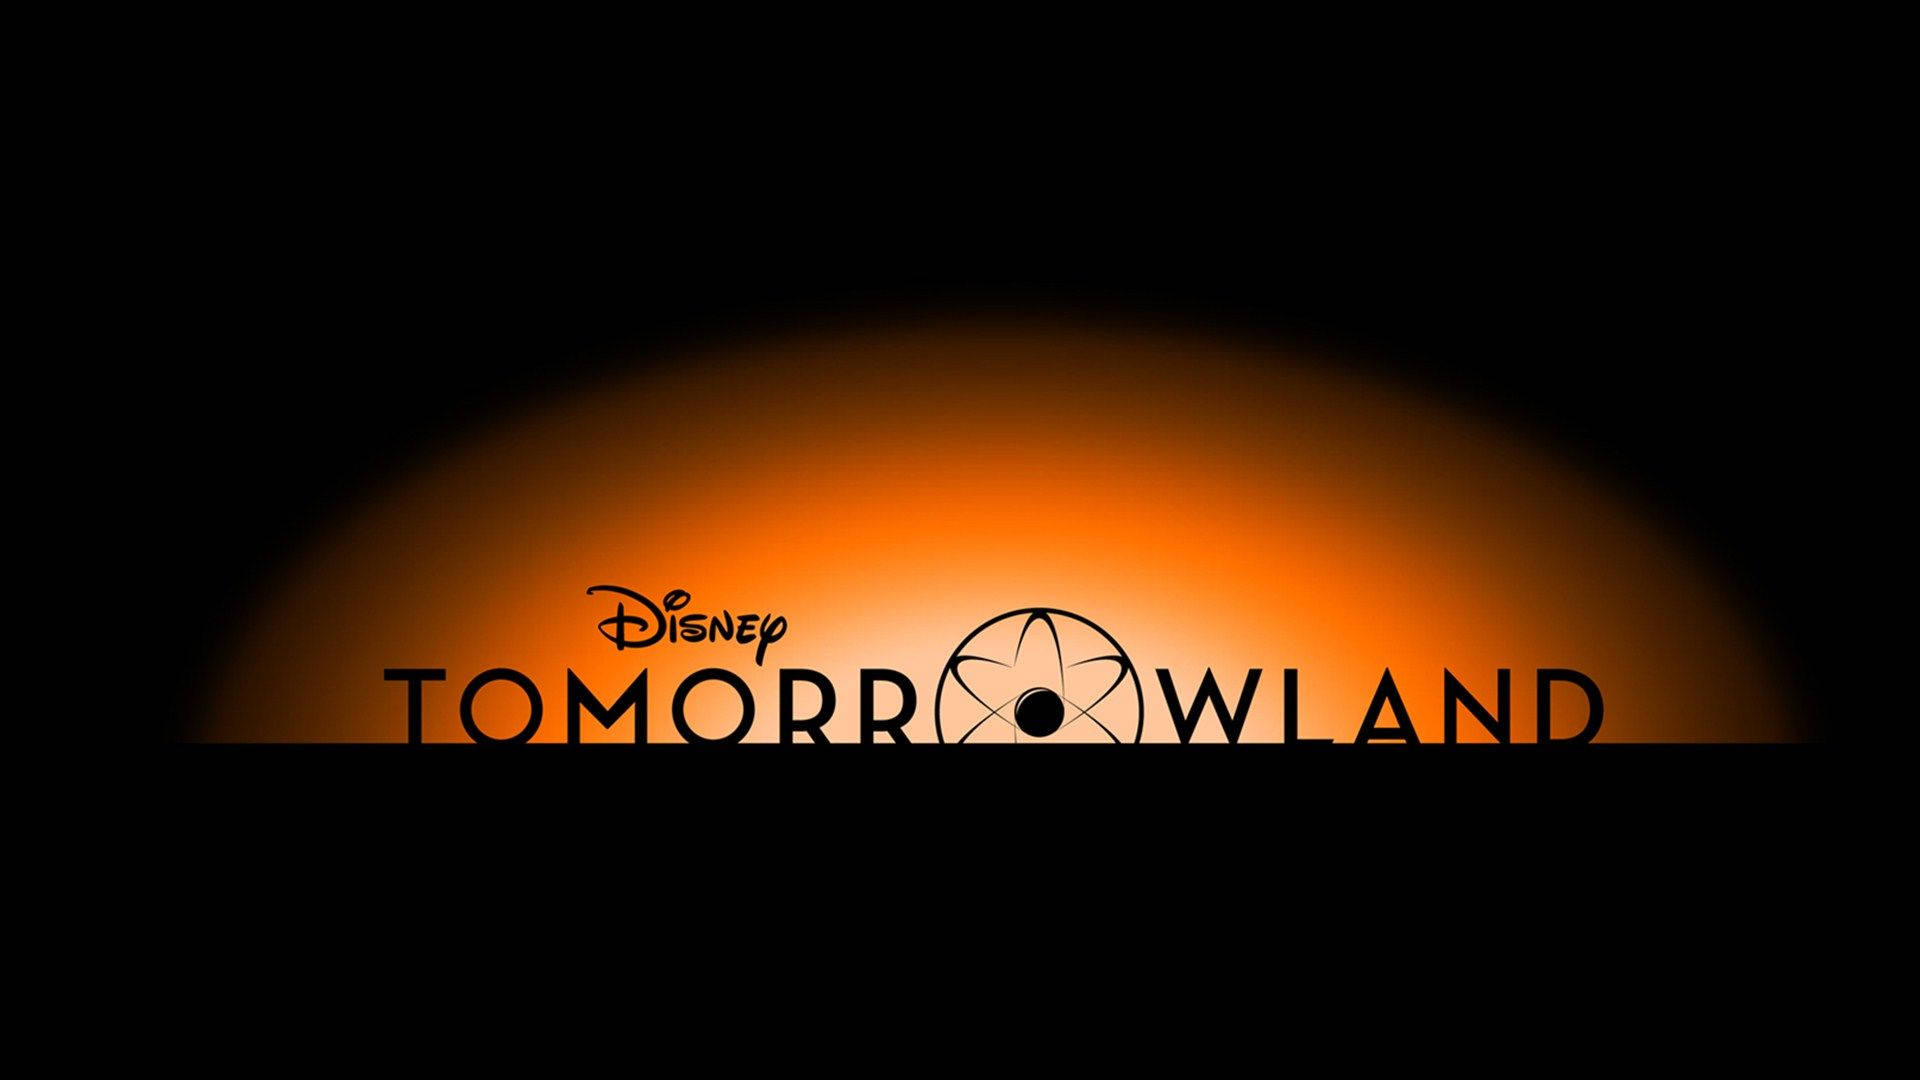 Disneytomorrowland Film Titel Wallpaper